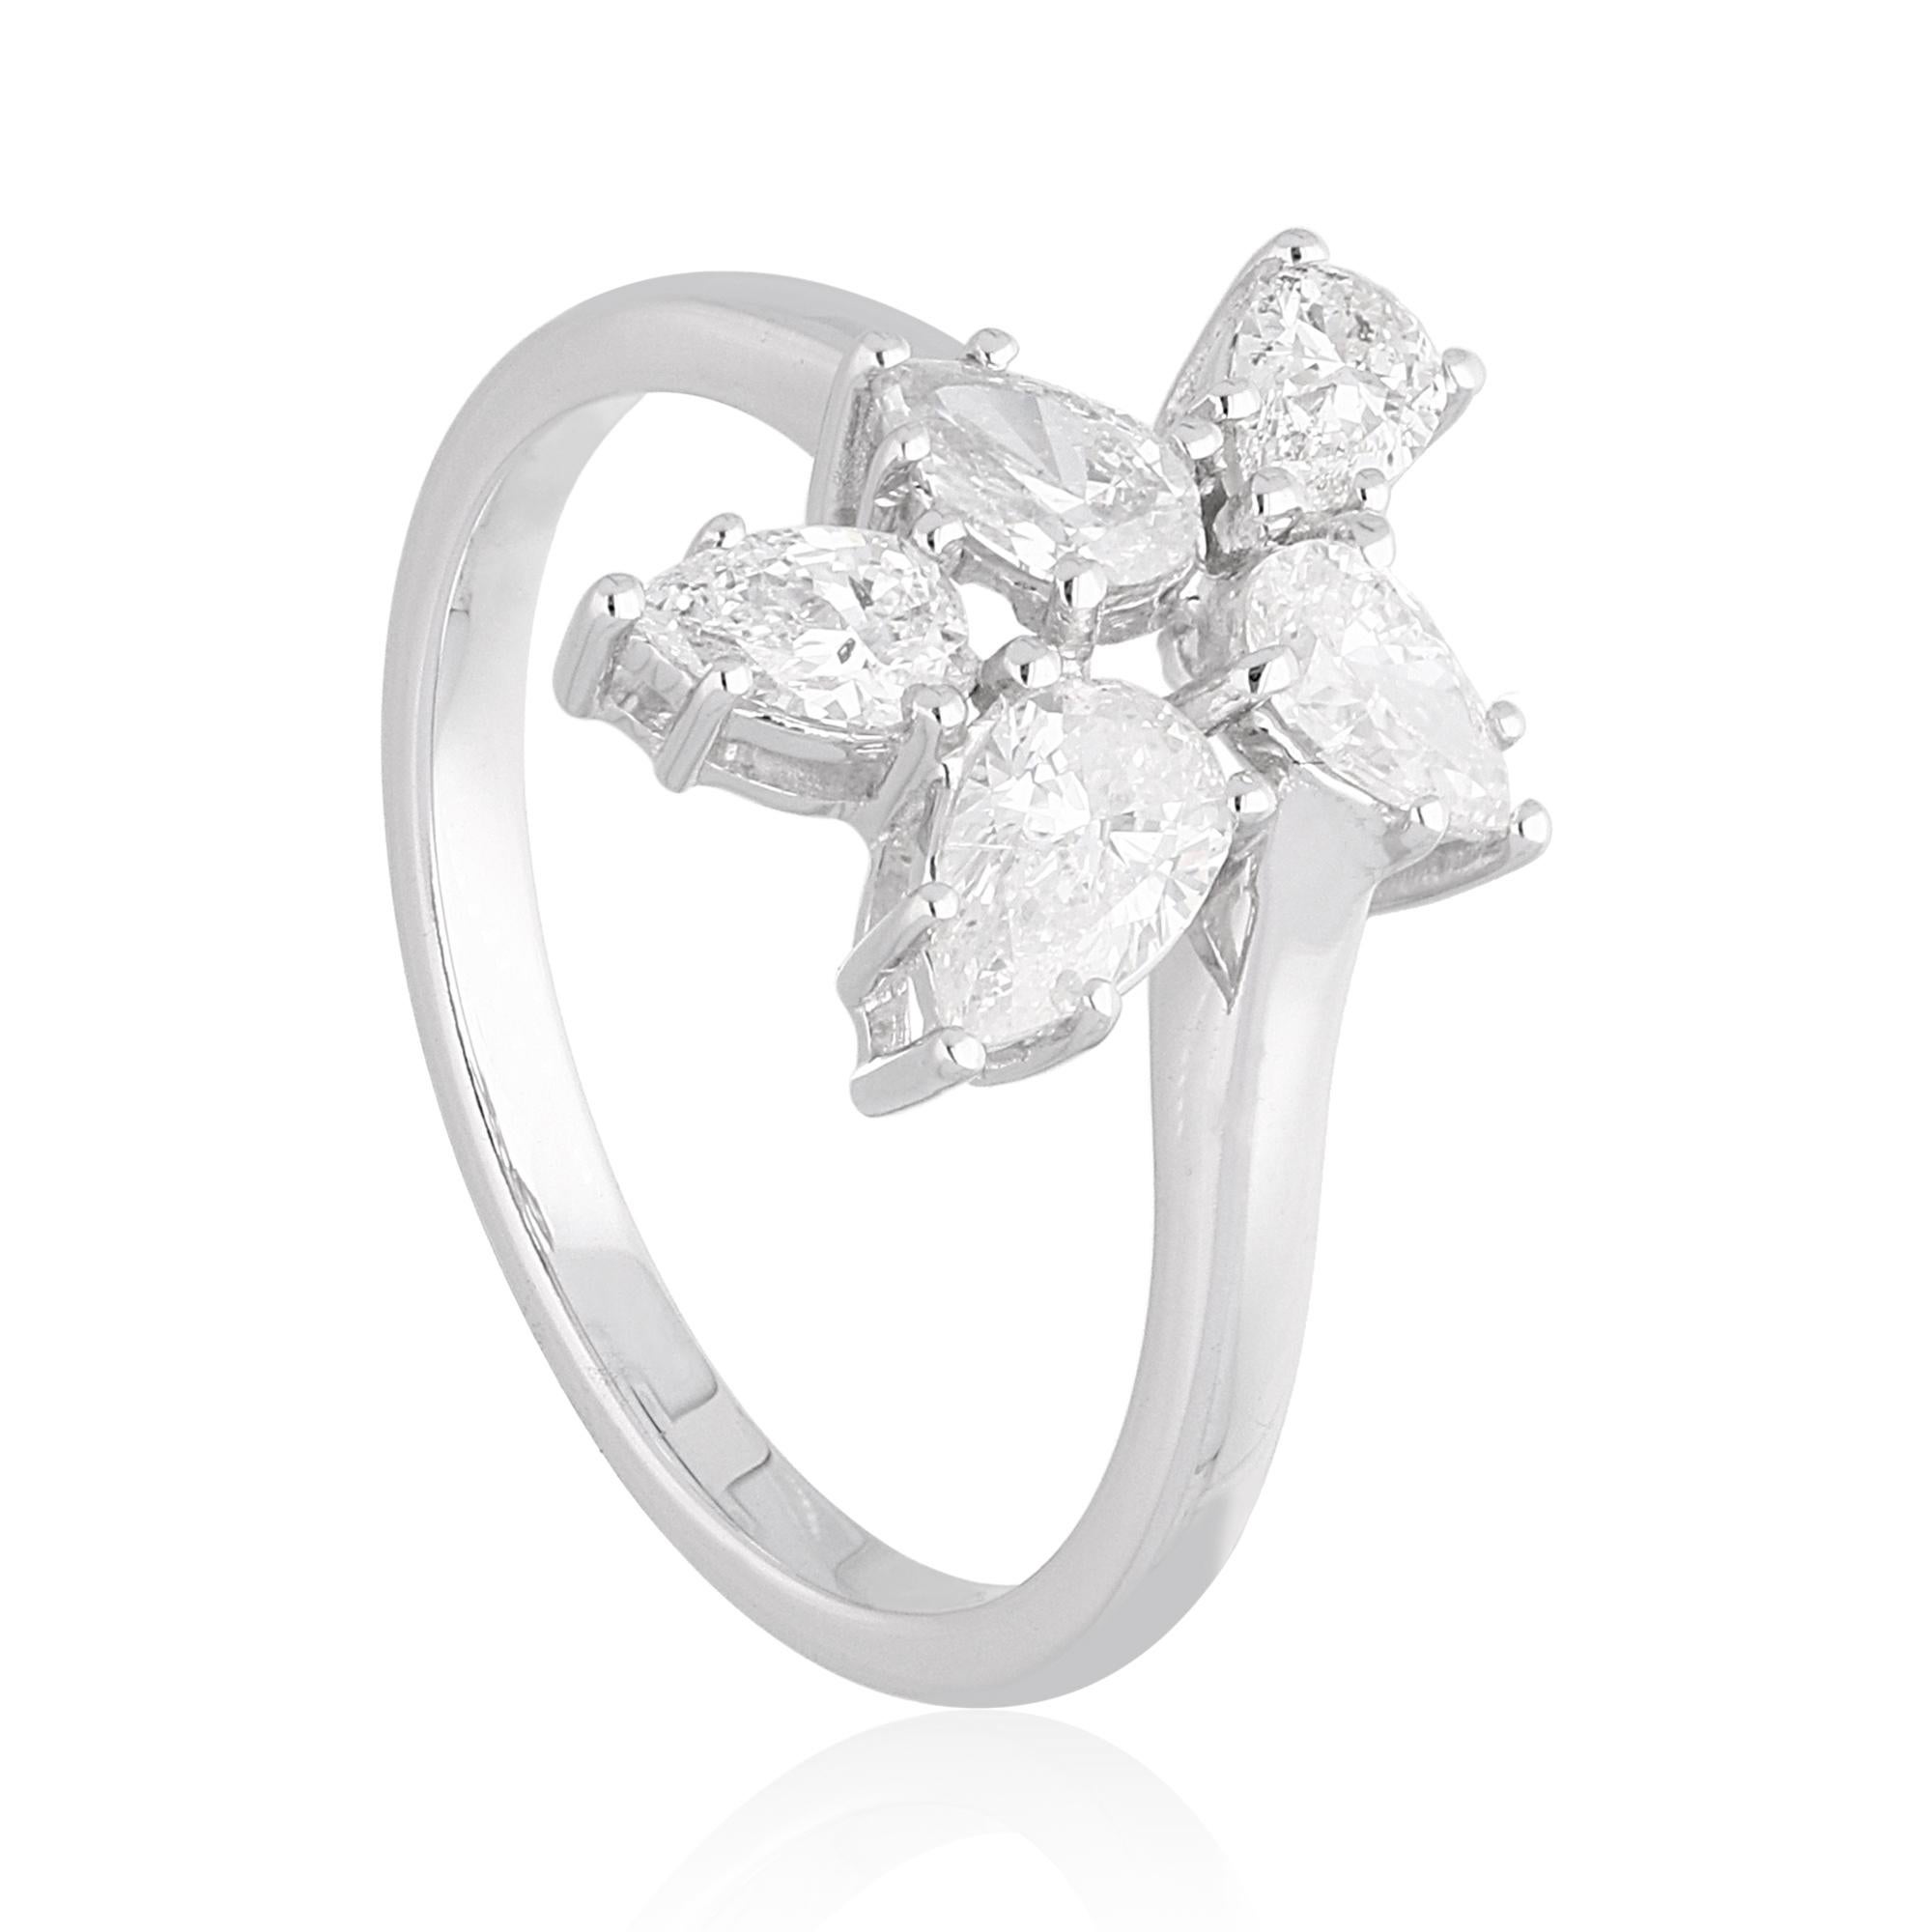 Women's Natural 1.01 Carat Pear Shape Diamond Ring 14 Karat White Gold Handmade Jewelry For Sale